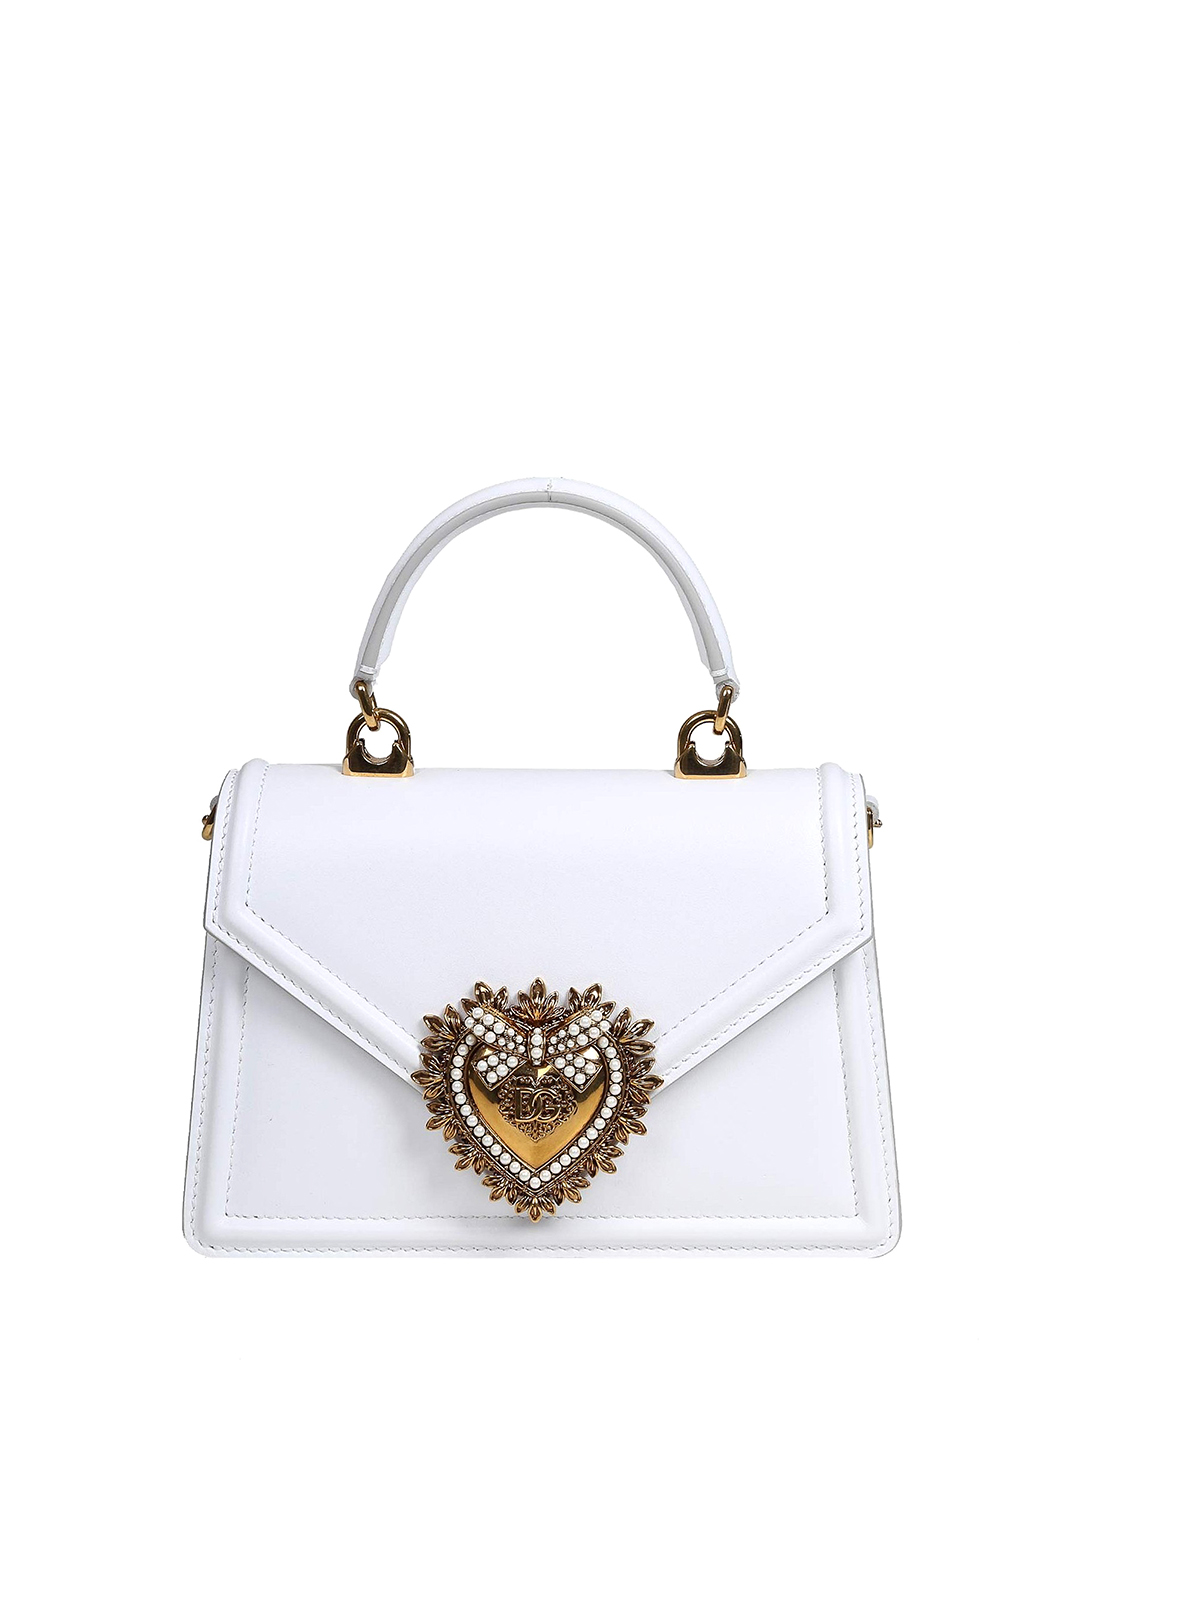 Dolce & Gabbana Devotion Small Bag In White